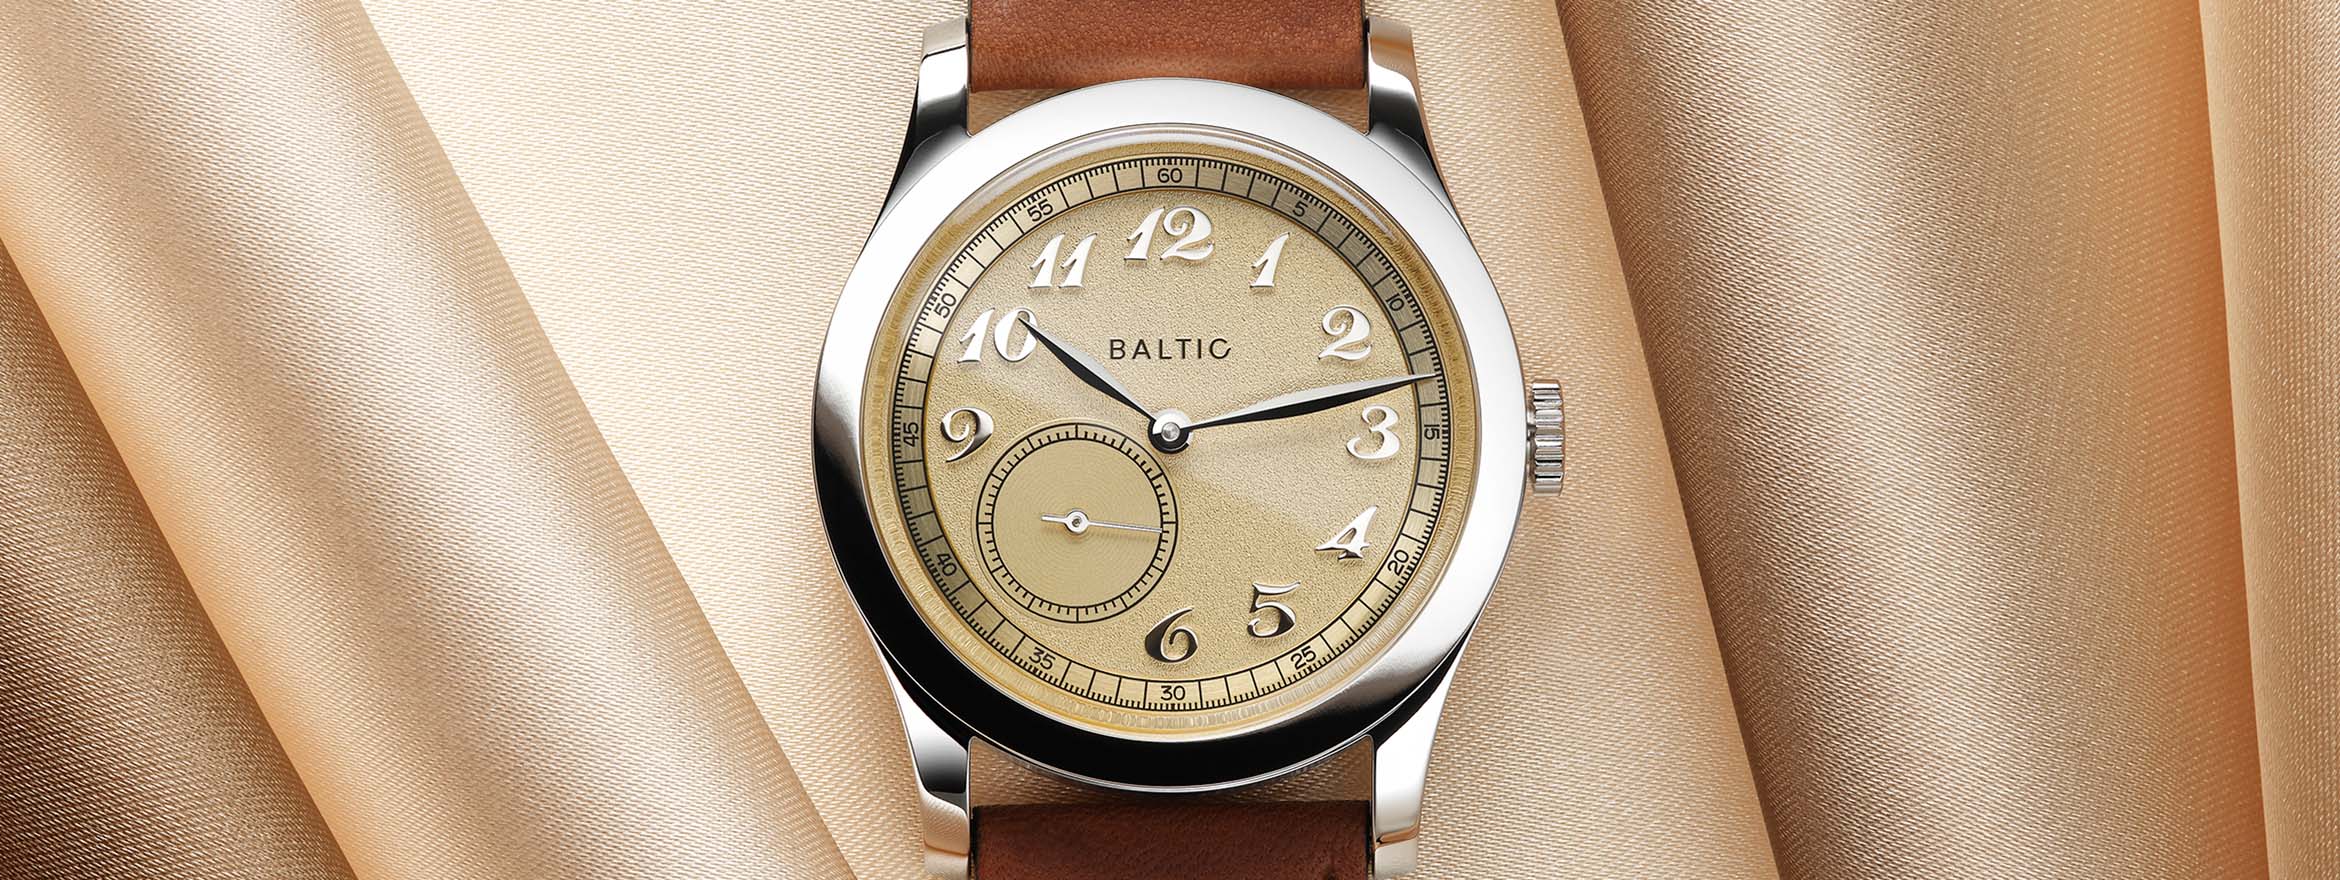 Baltic MR01 Watches of Switzerland Edition